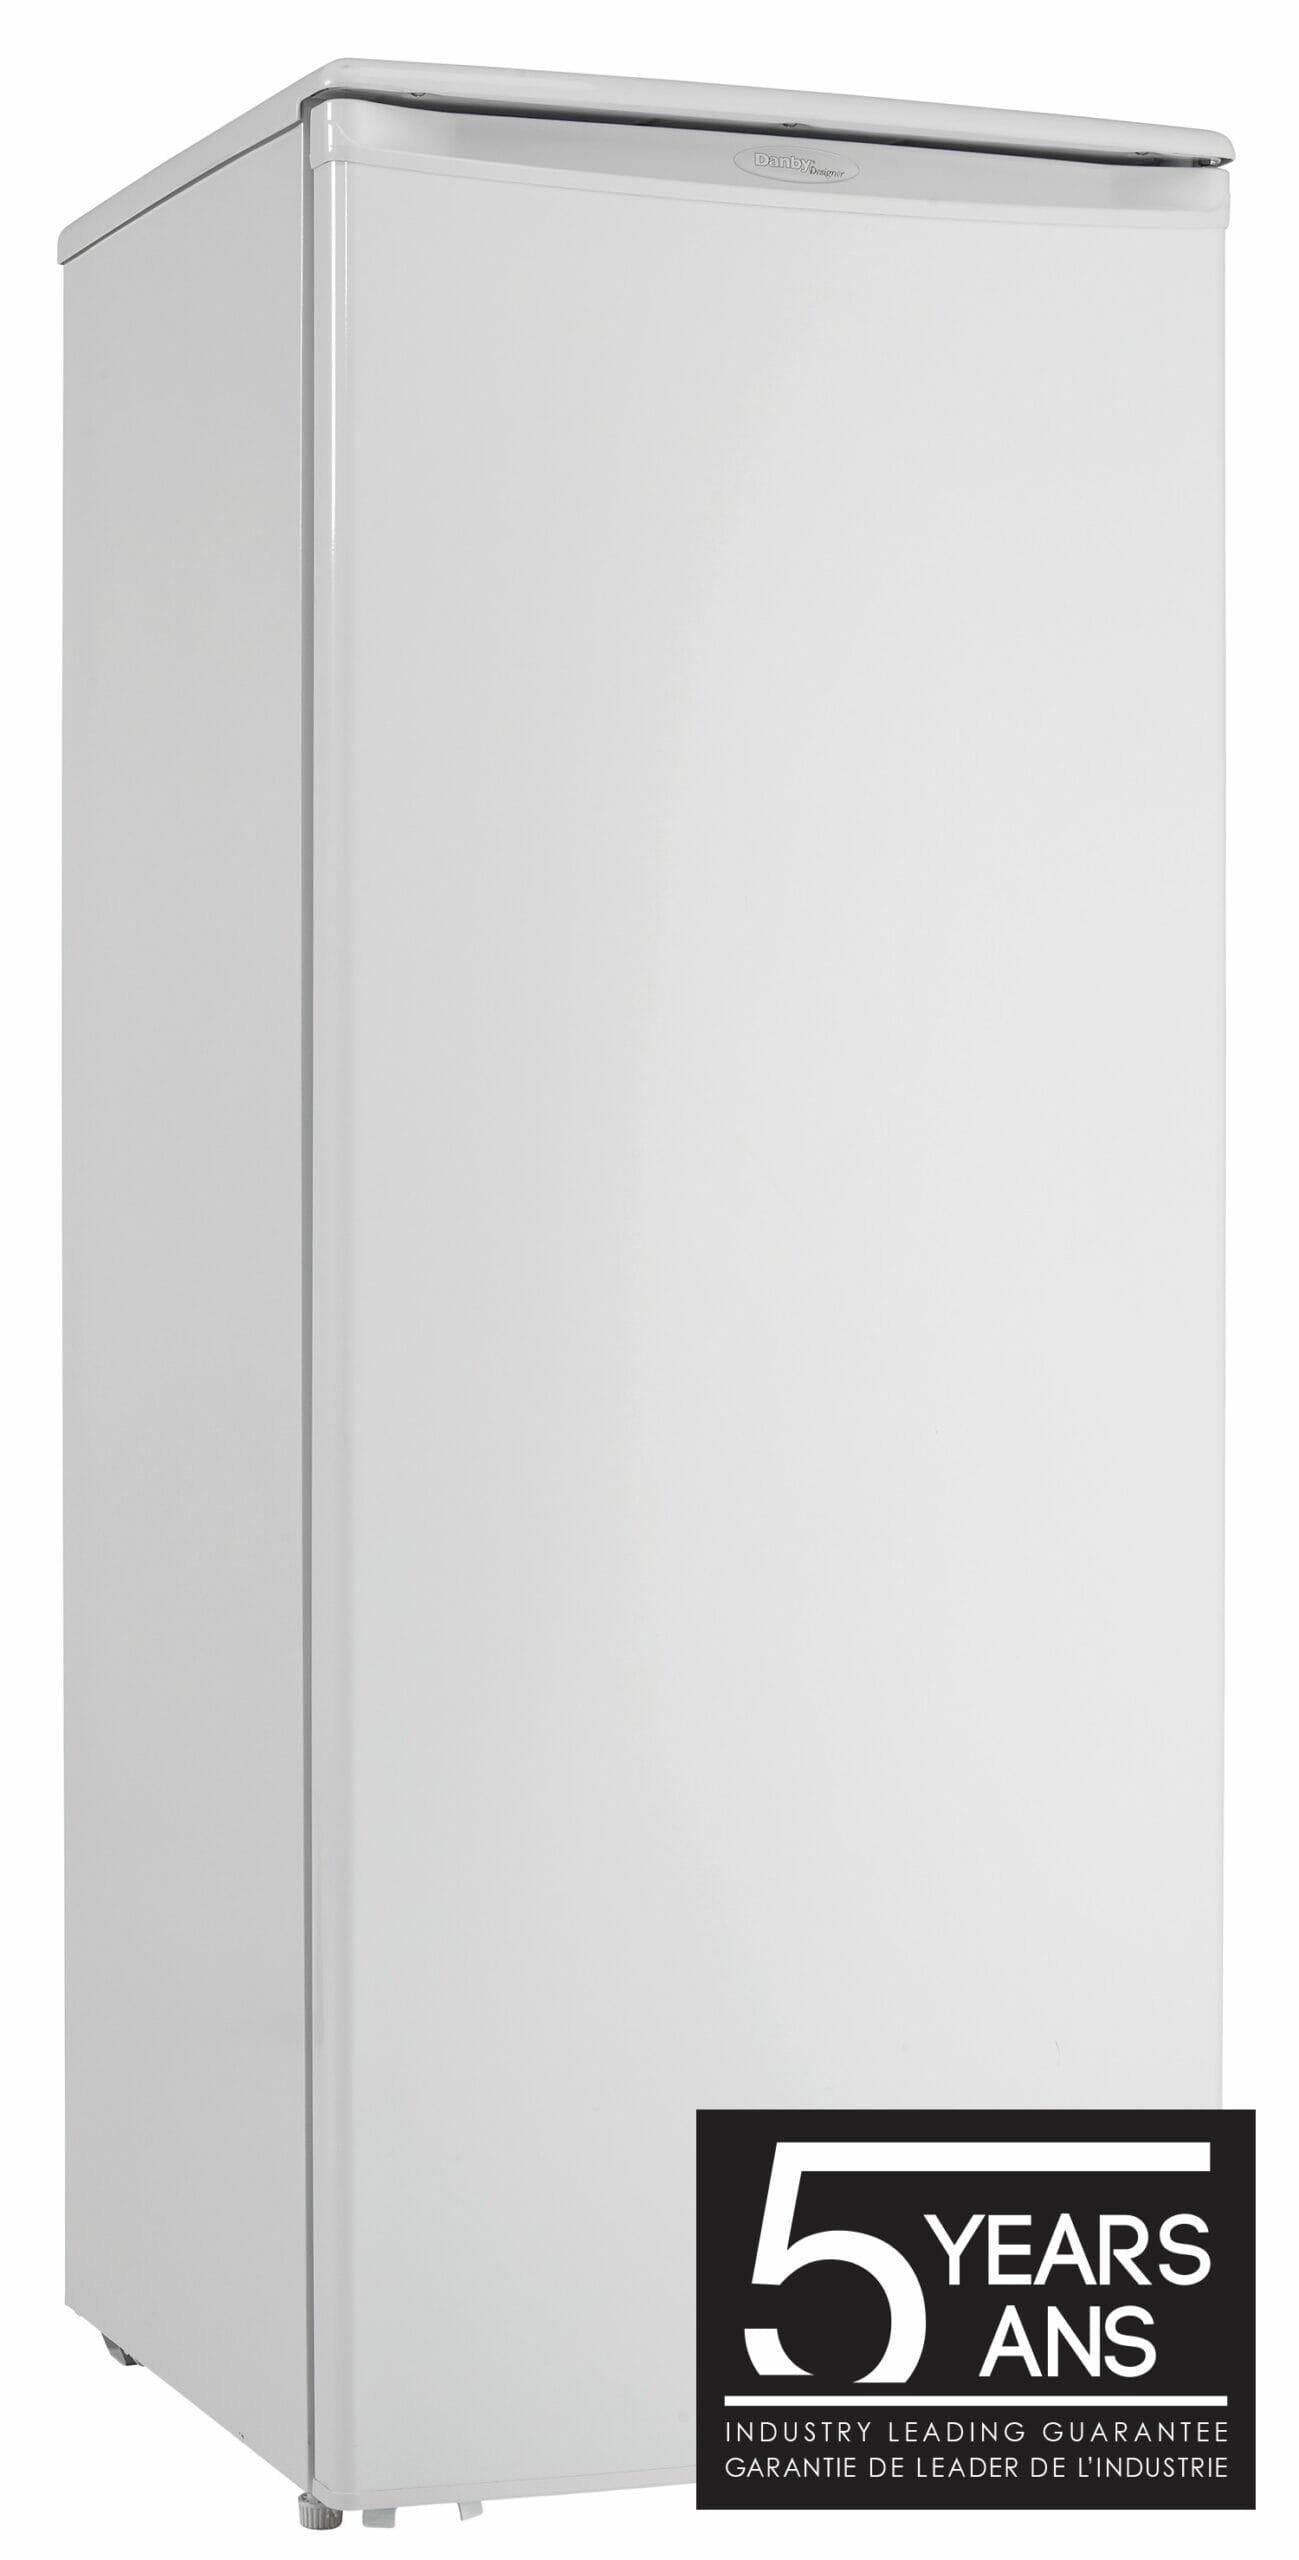 Danby Designer 8.5 cu. ft. Upright Freezer in White